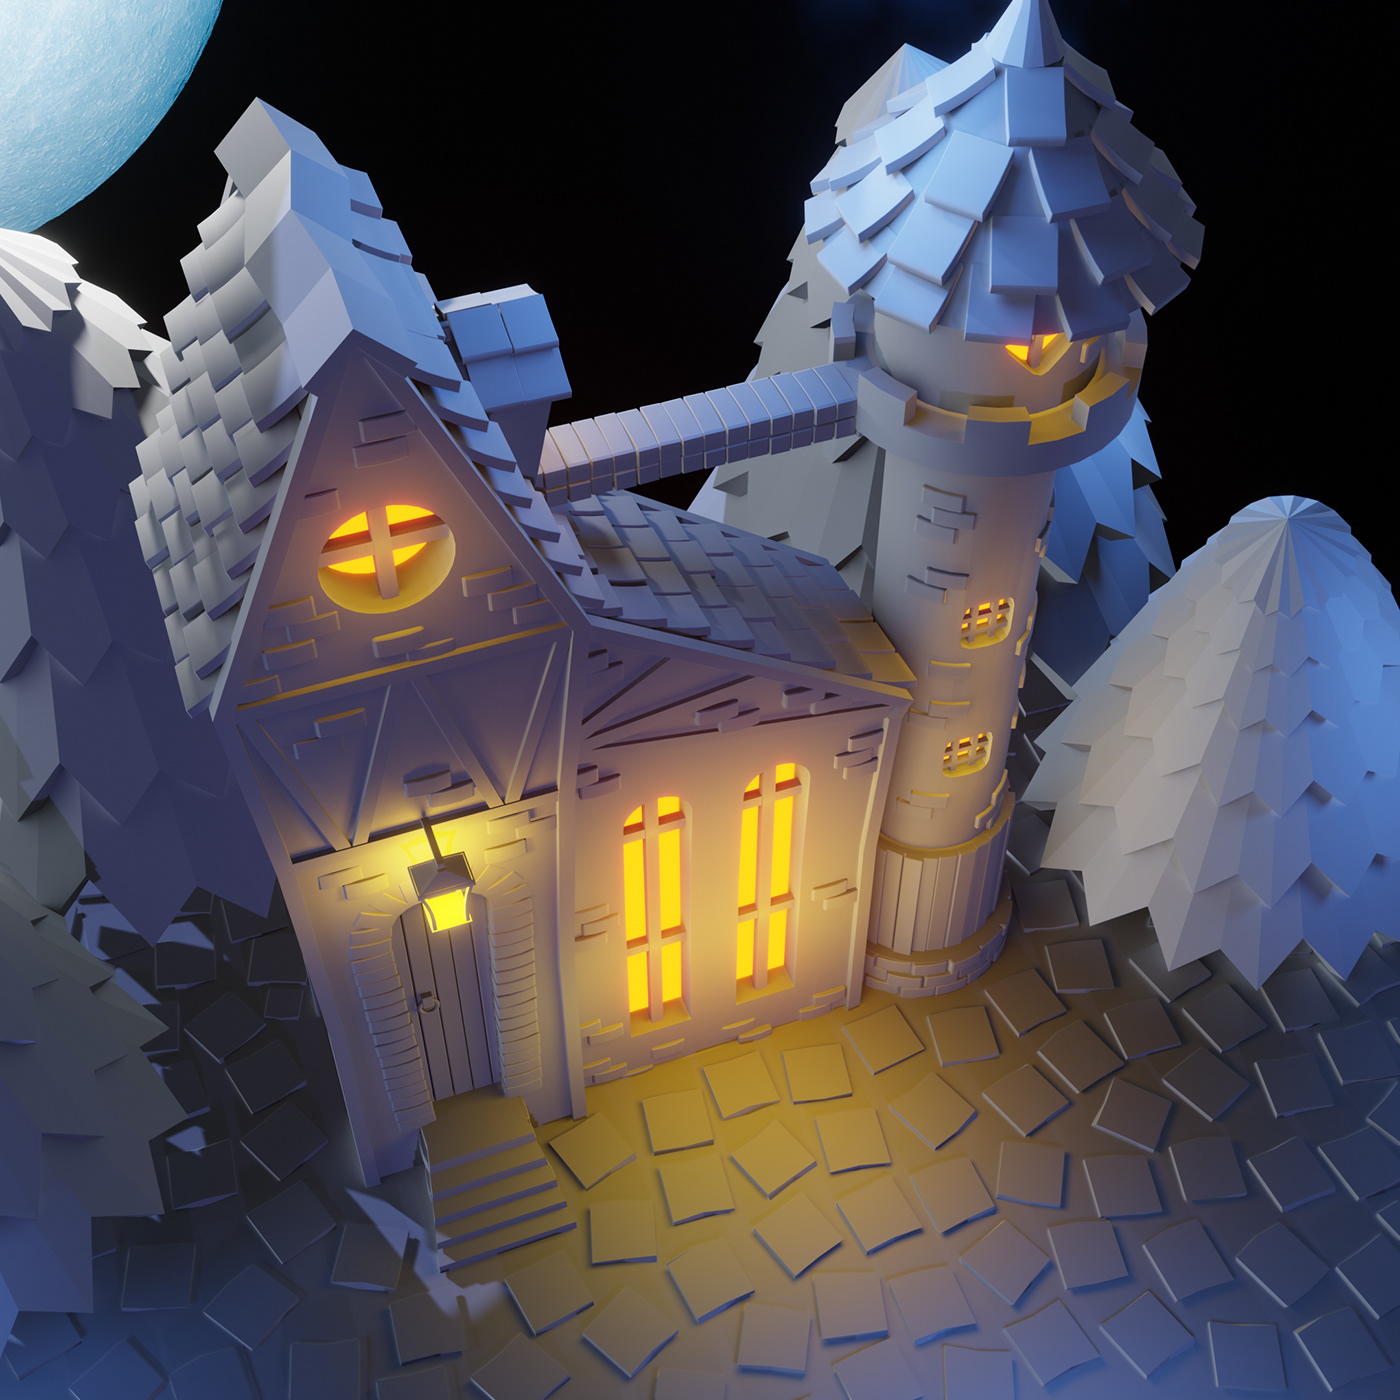 3D art blender3d Castle clouds moon night Render CGI environment